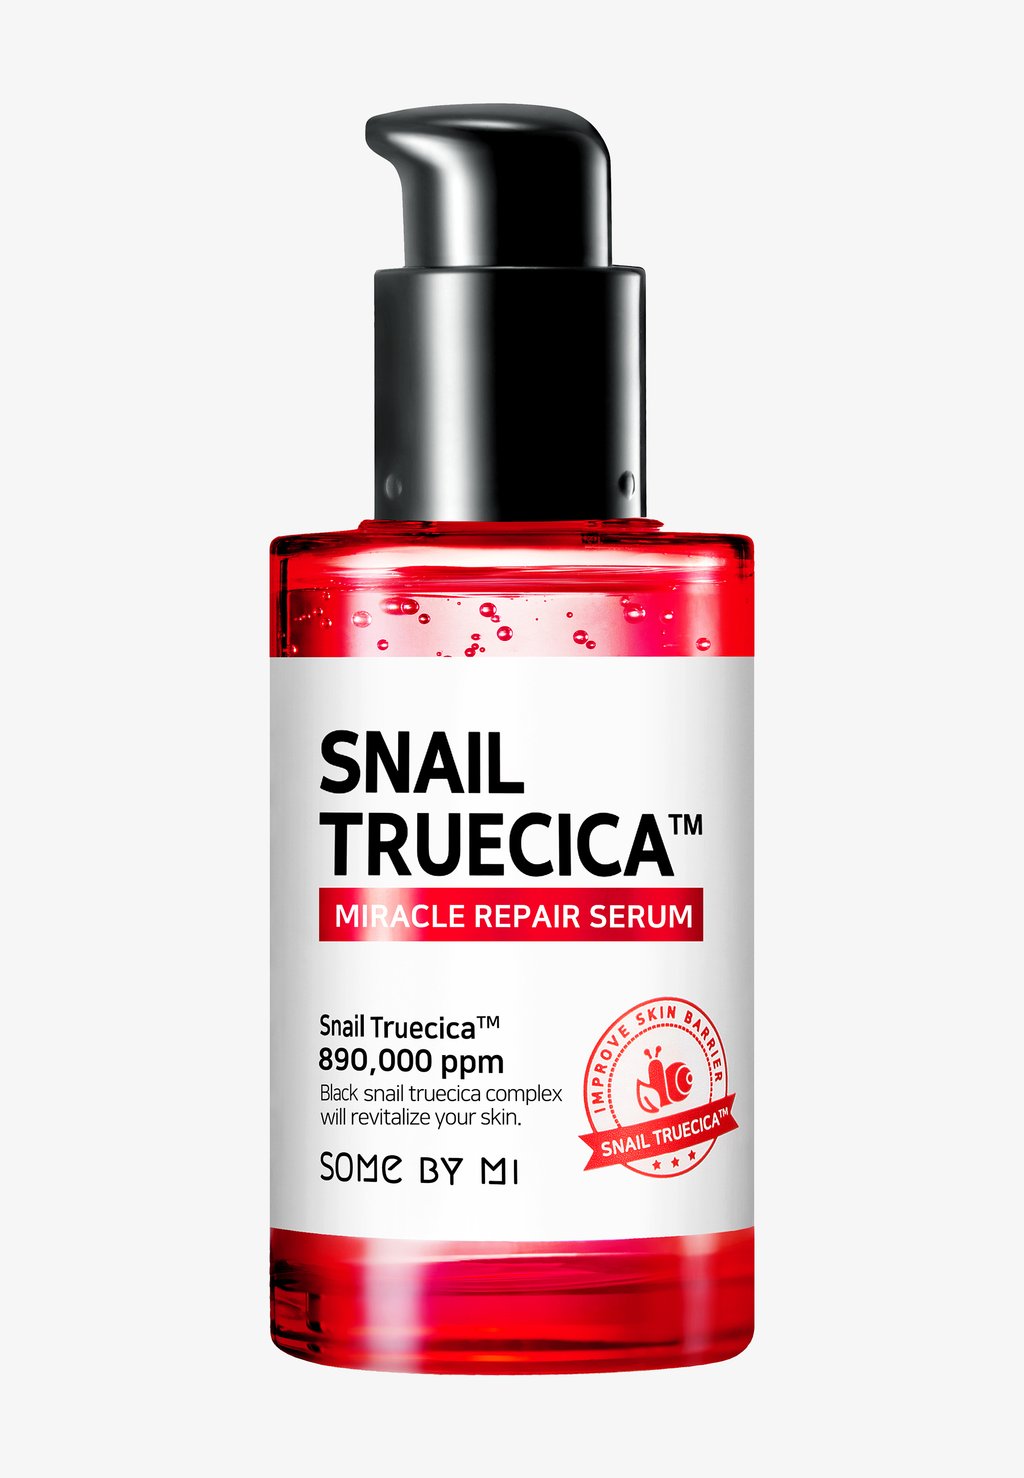 Сыворотка Snail Truecica Miracle Repair Serum SOME BY MI some by mi repair cream snail truecica miracle white 2 11 oz 60 g